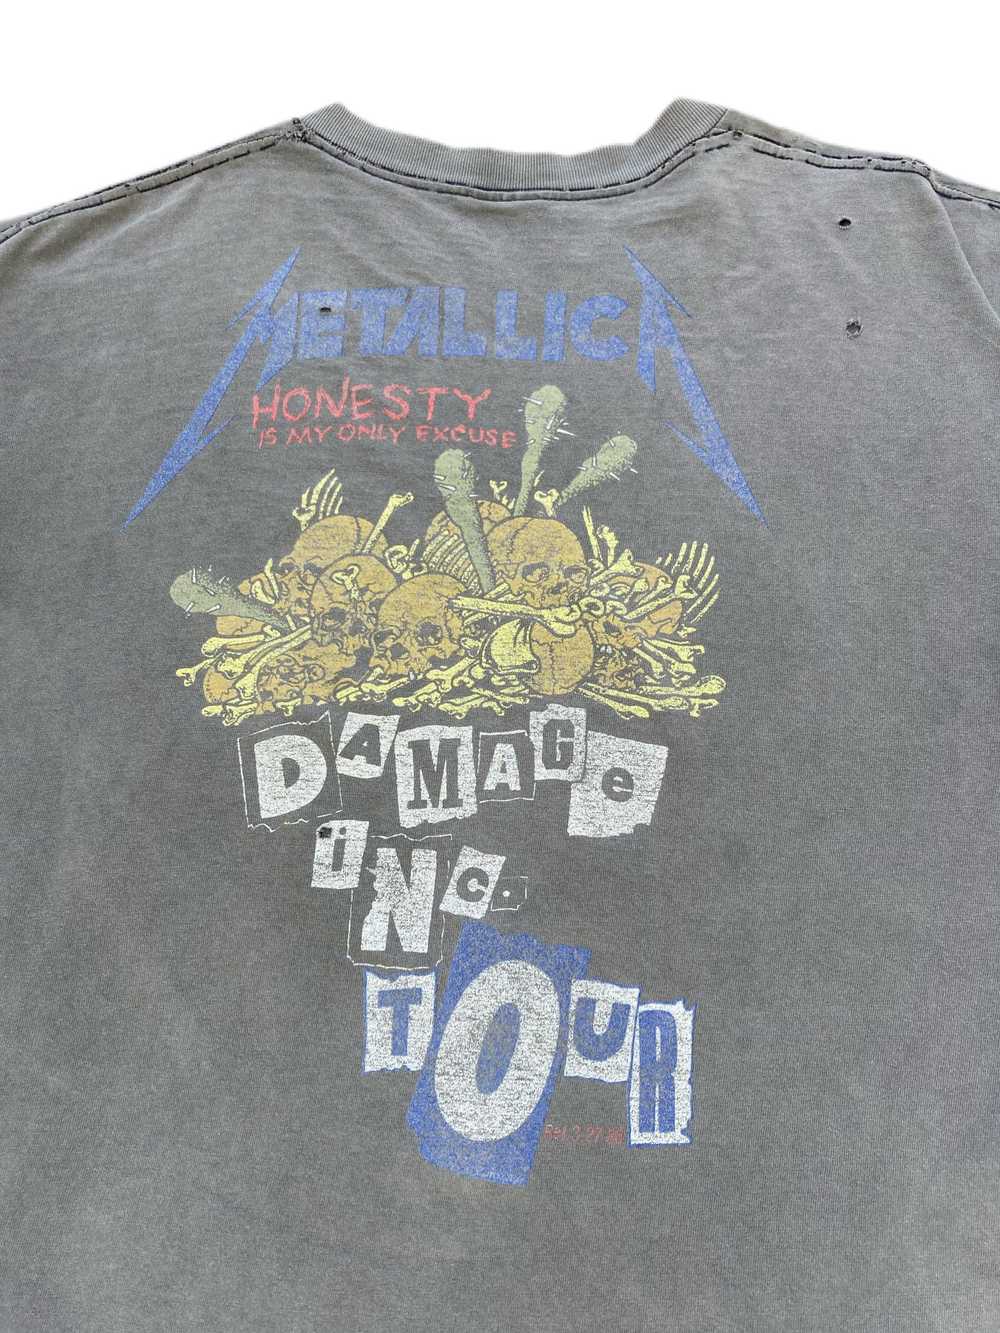 vintage metallica tee shirt damaged justice 1987 - image 4